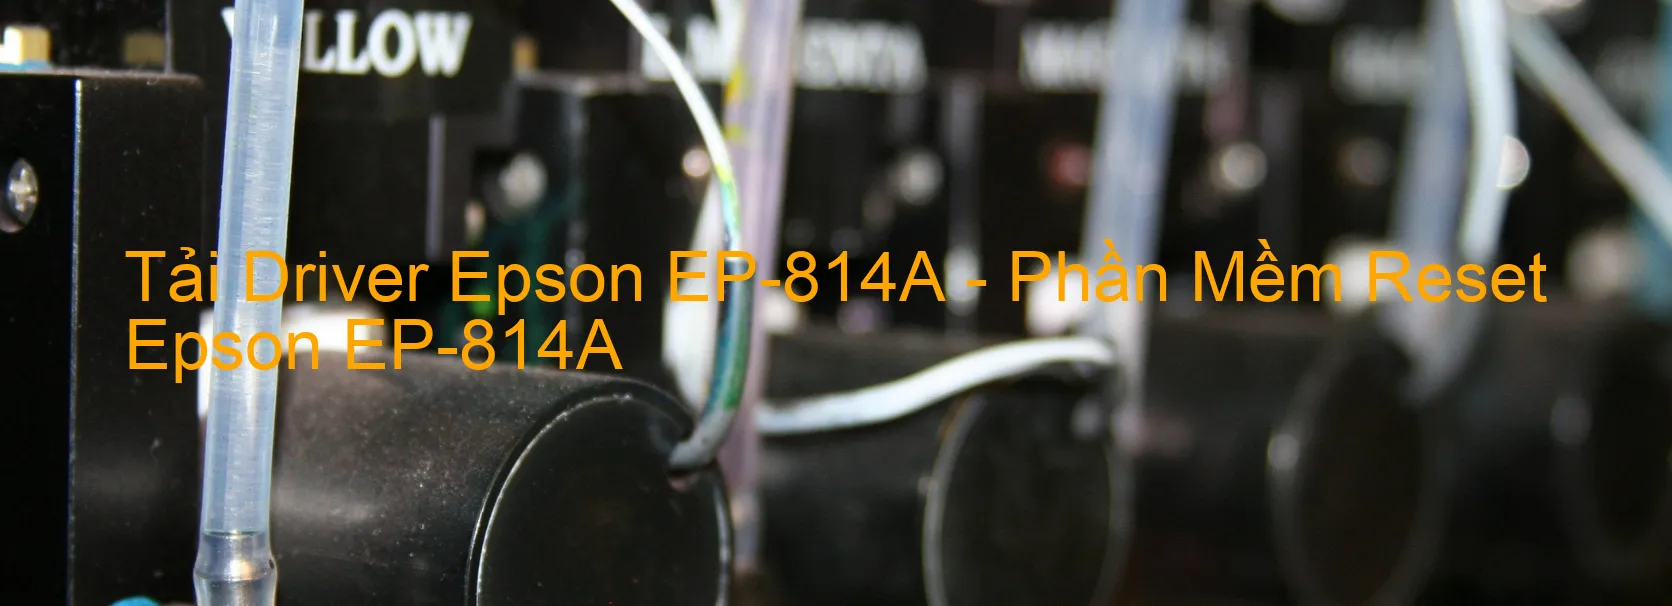 Driver Epson EP-814A, Phần Mềm Reset Epson EP-814A